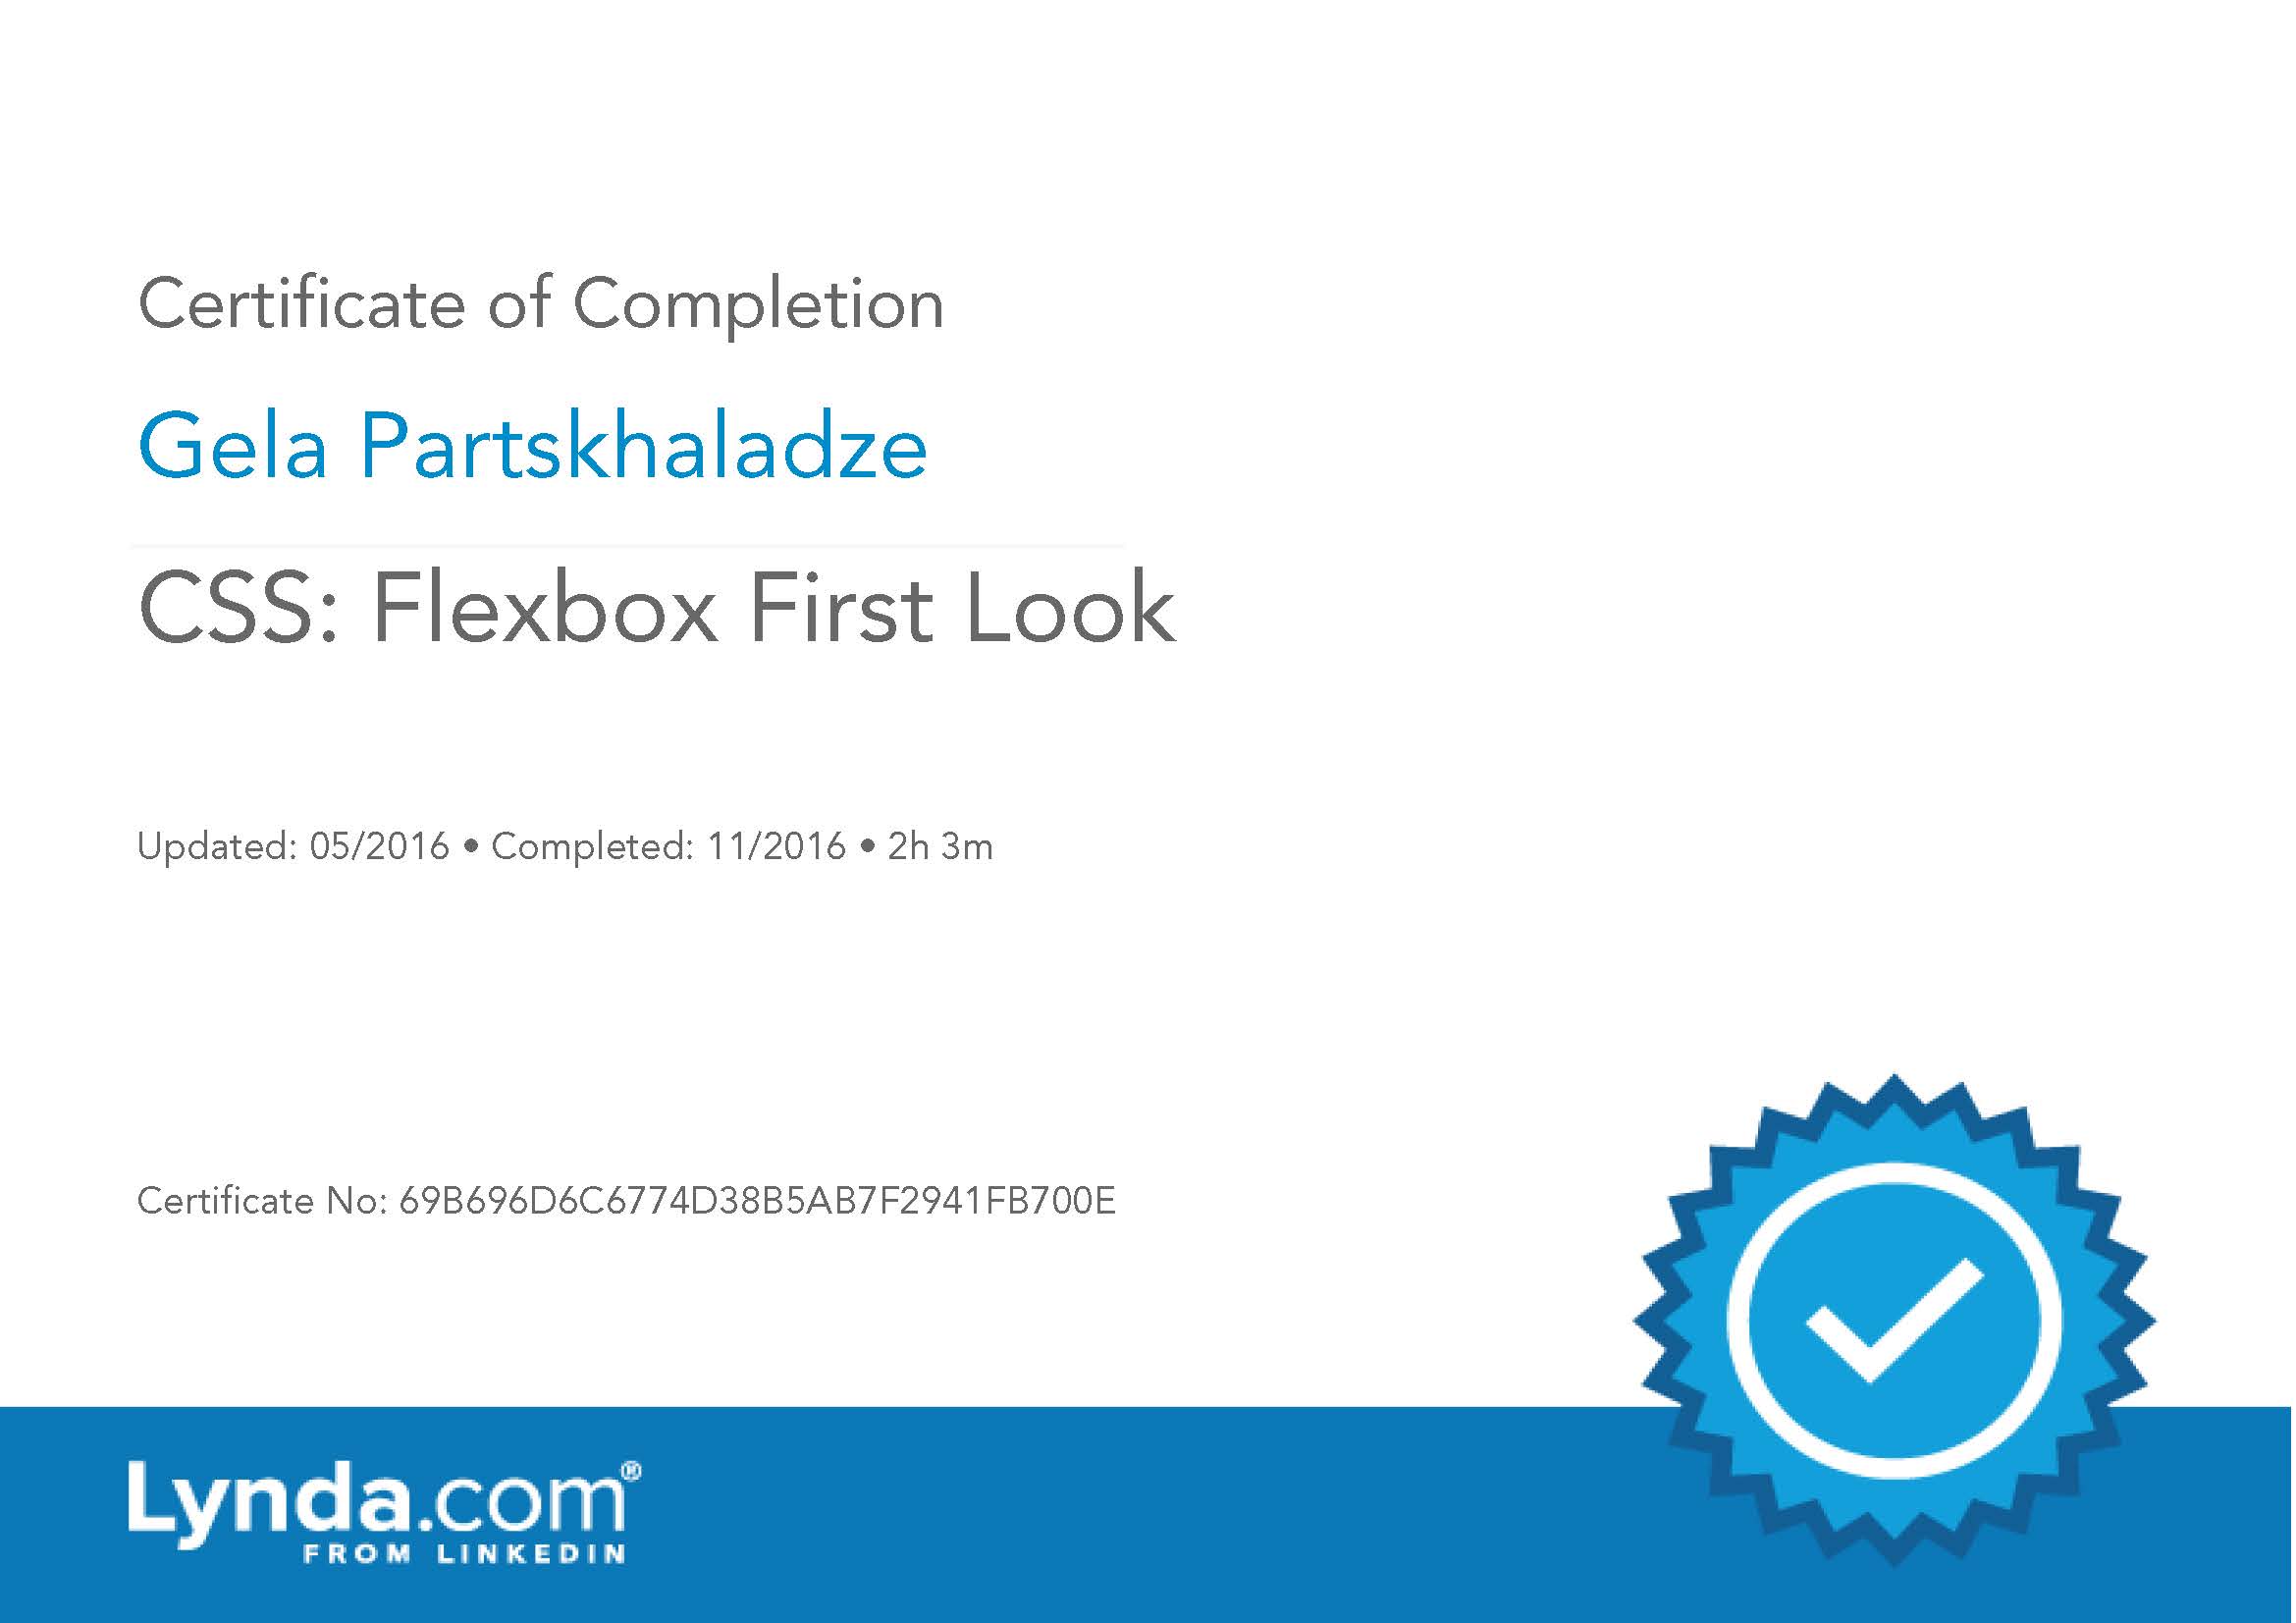 CSS Flexbox First Look